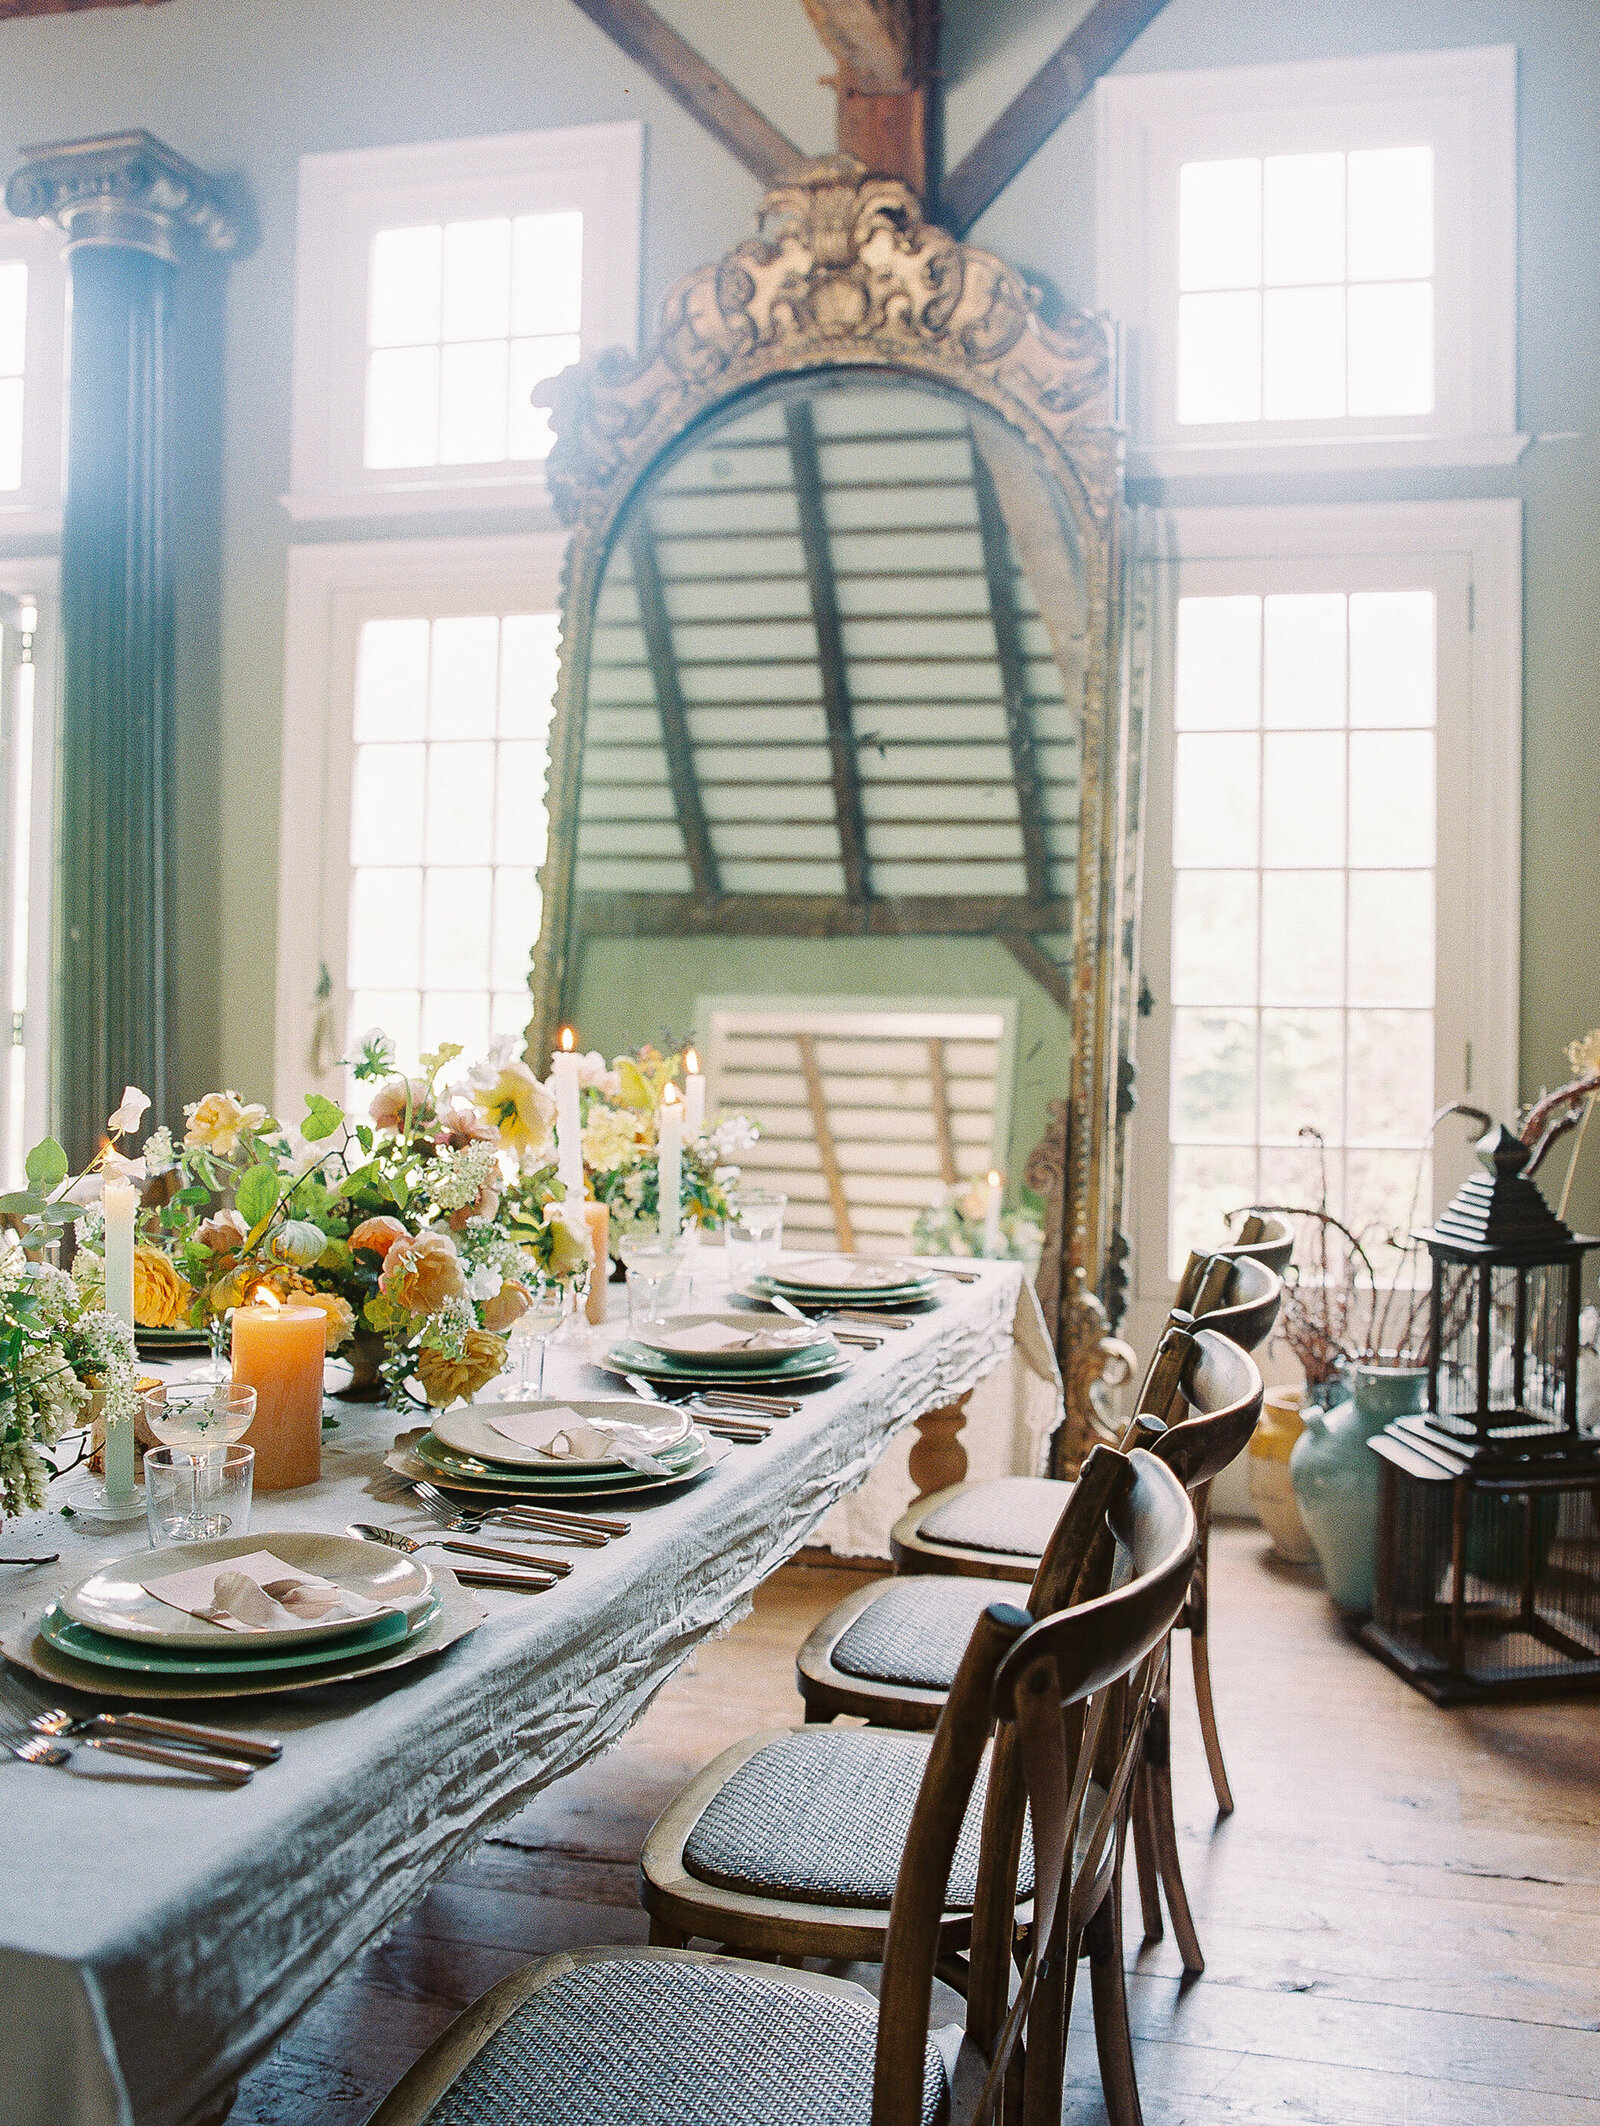 max-owens-design-at-home-floral-arrangements-29-dining-room